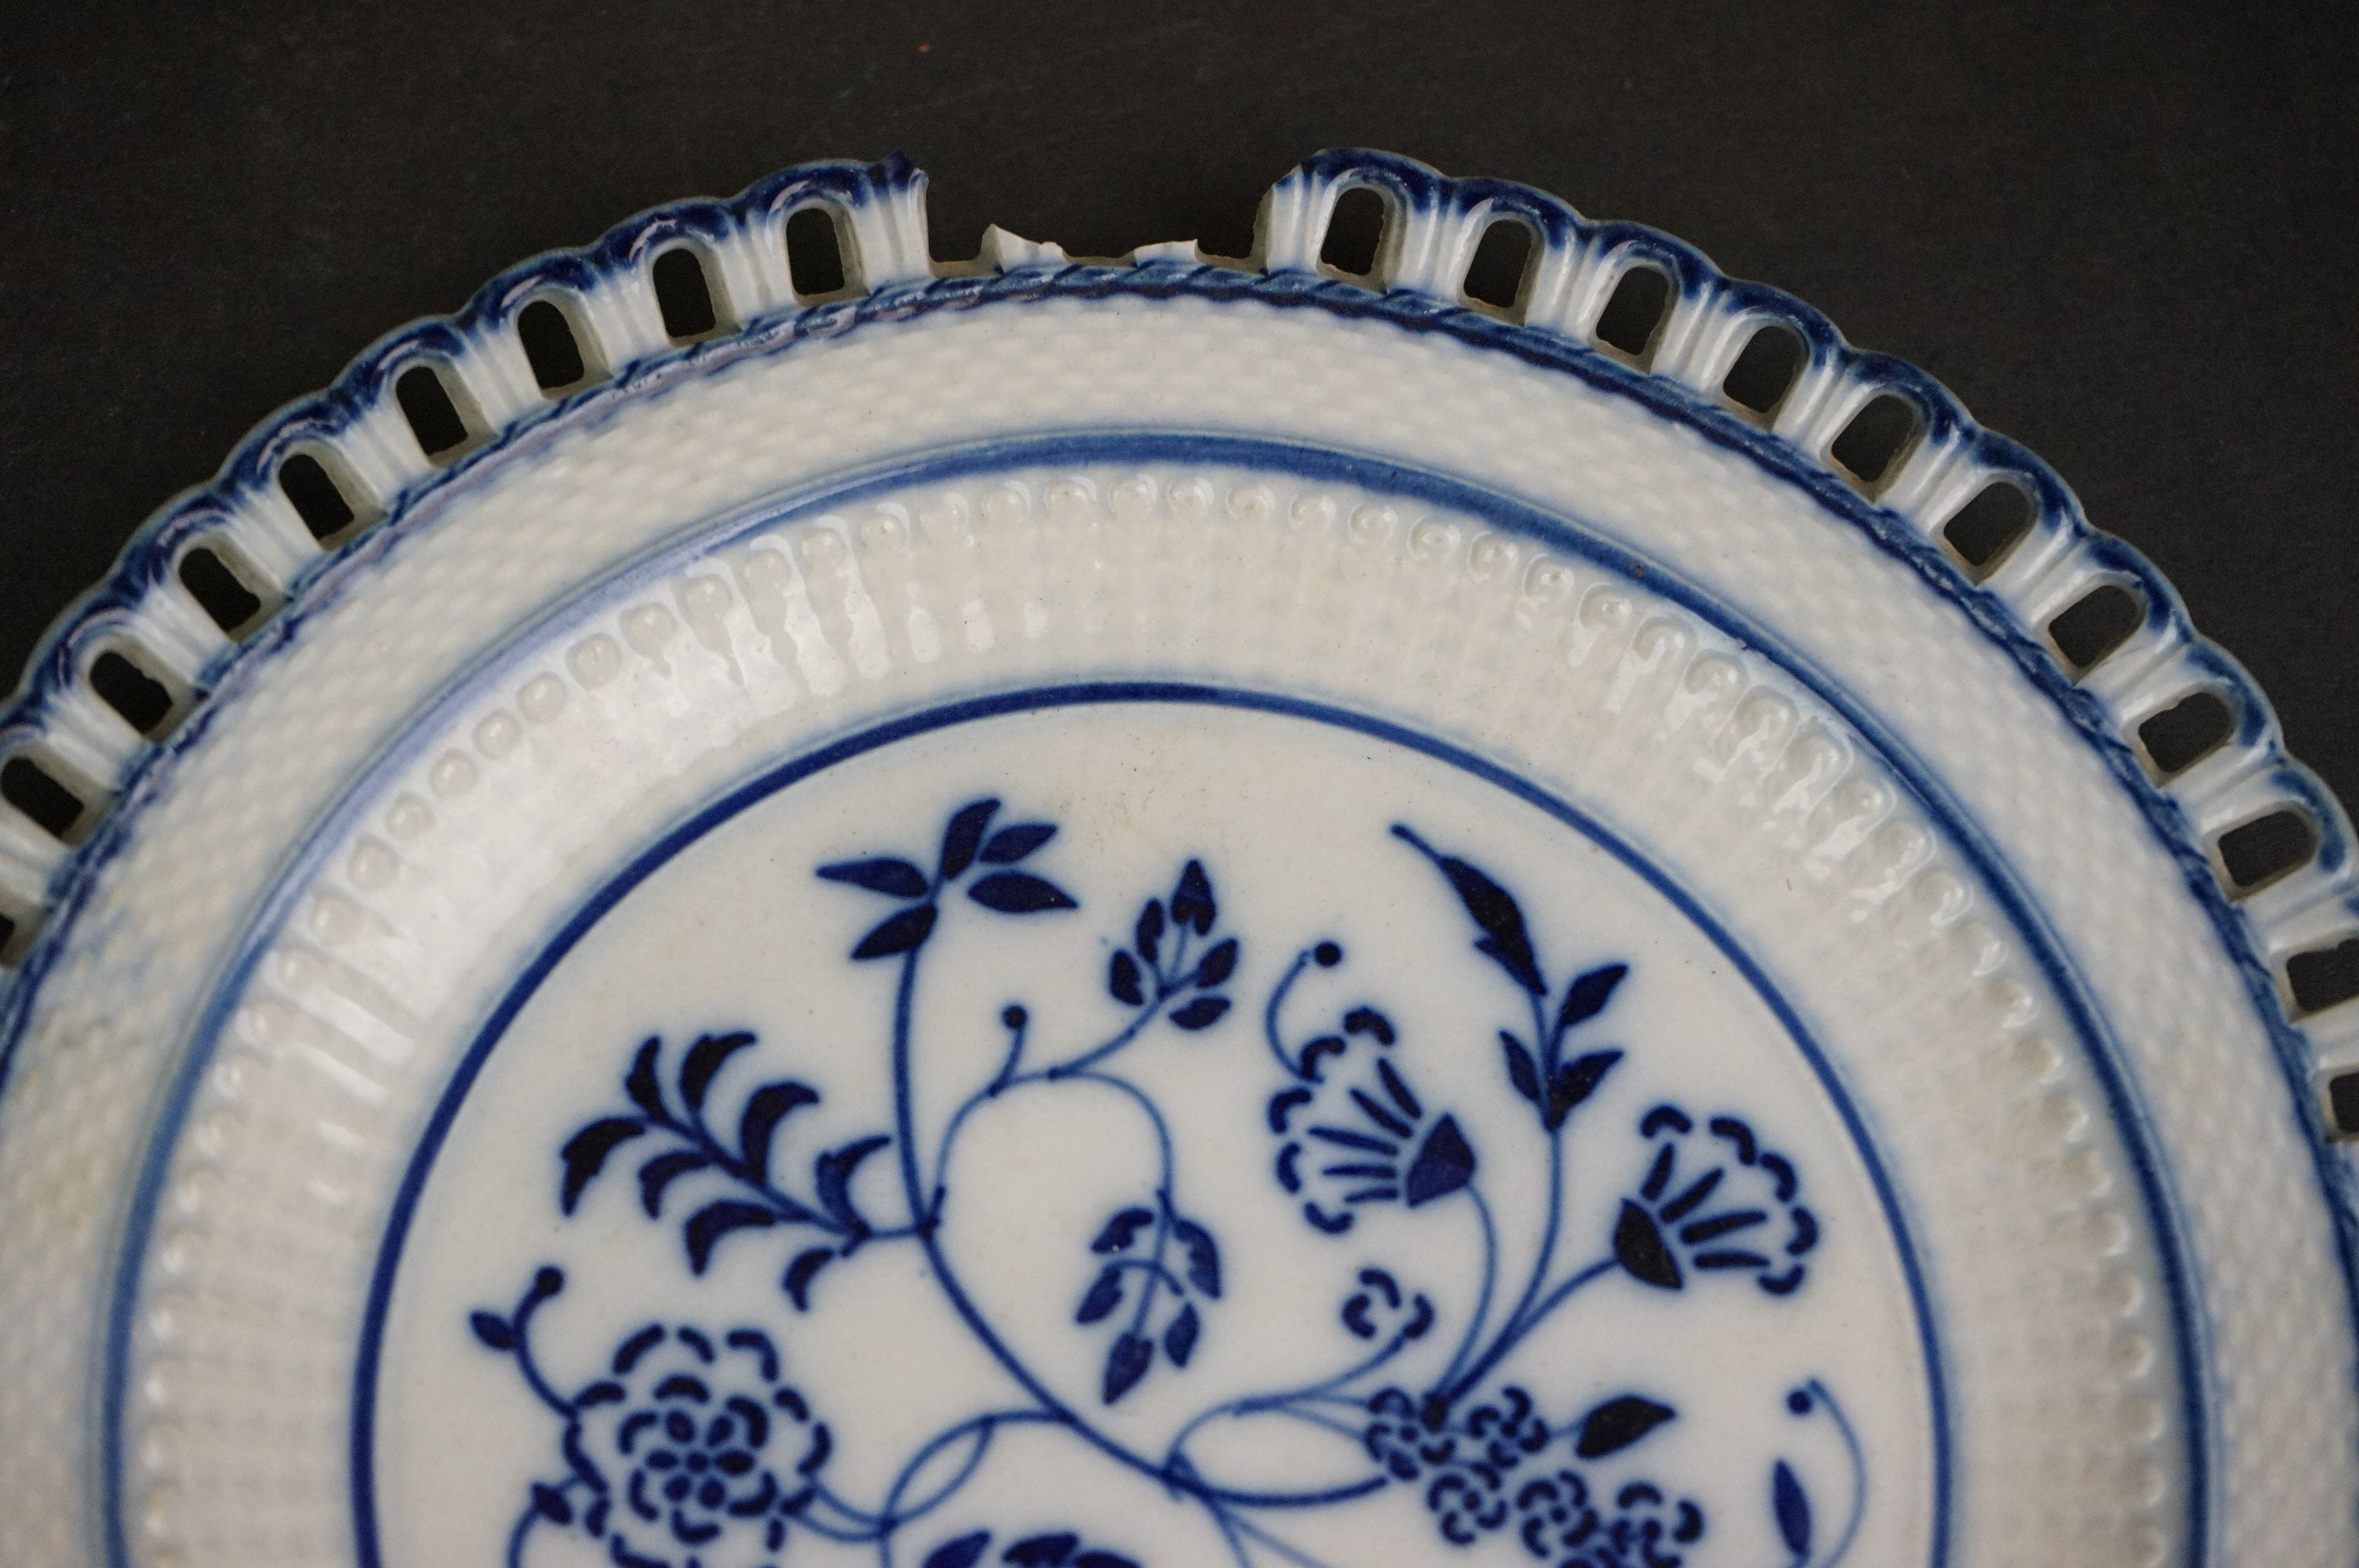 Set of Six Waechtersbach Basketweave Ribbon Plates with blue and white onion style pattern - Image 4 of 4